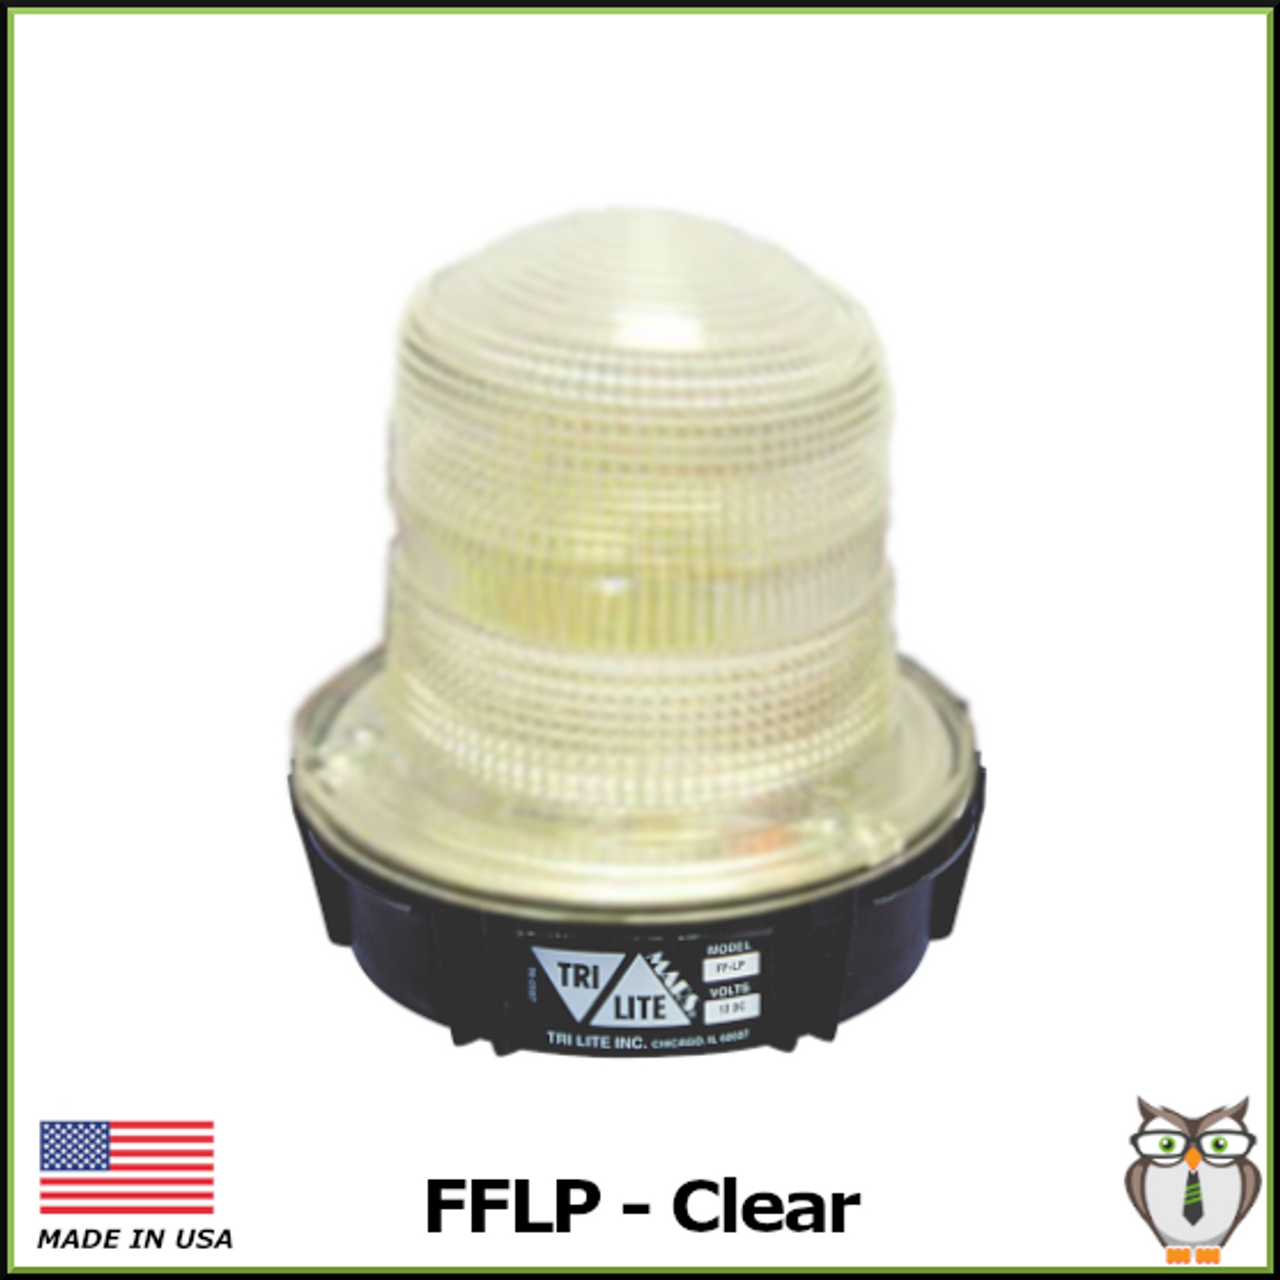 FFLP AC Flashing Light - Clear